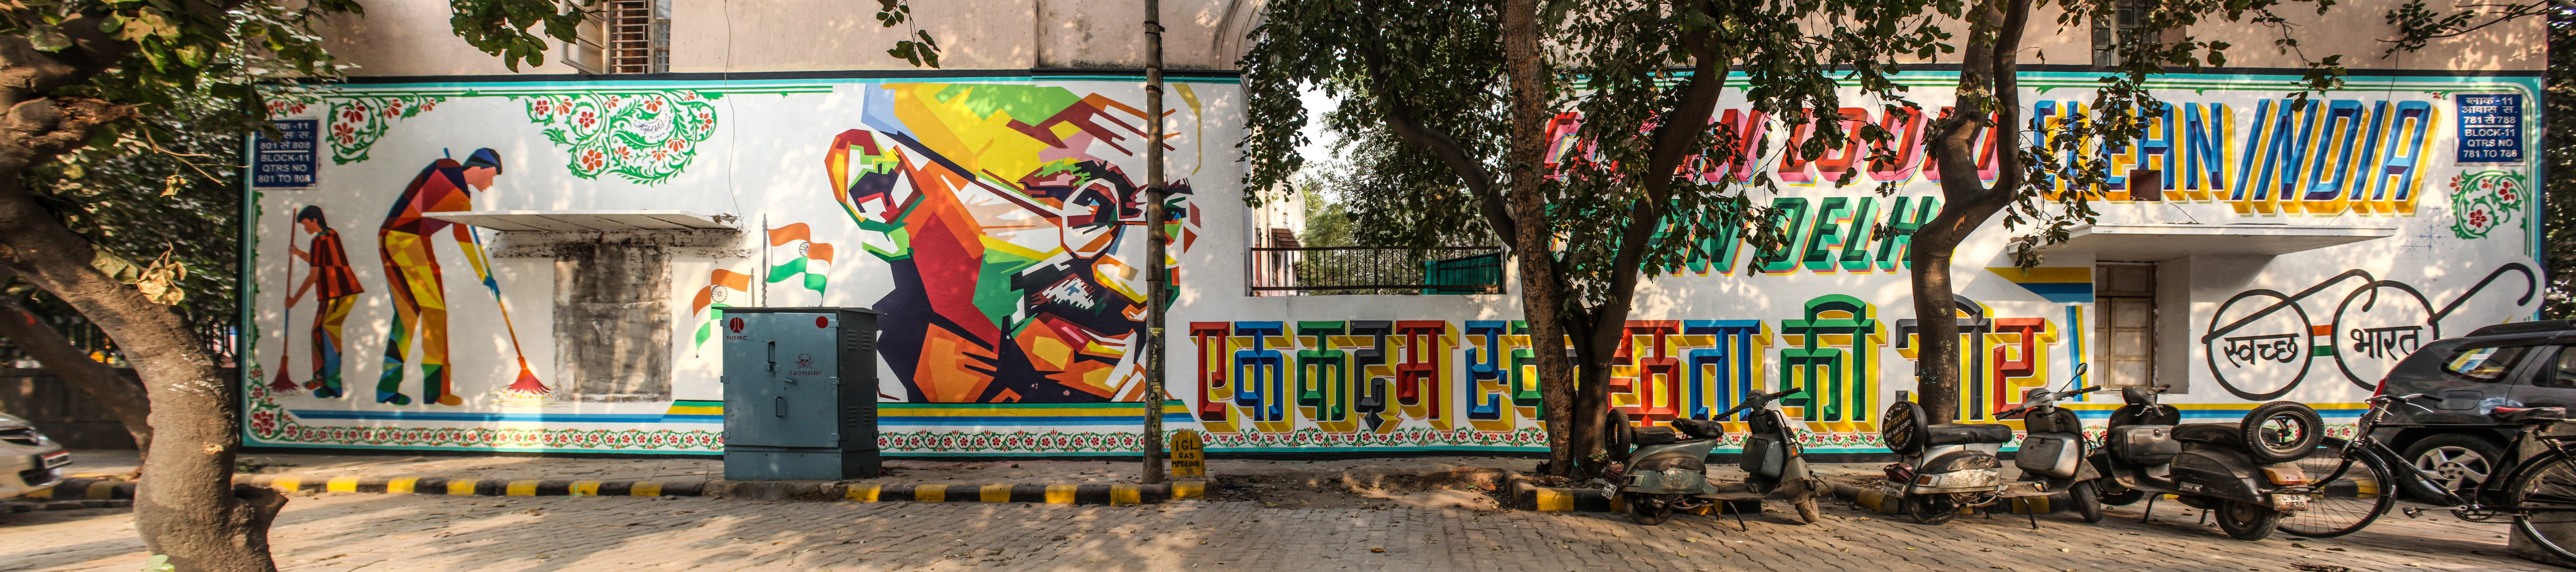 Swatcha Barat Wall Final painter Kafeel Photo by Pranav Gohil 1